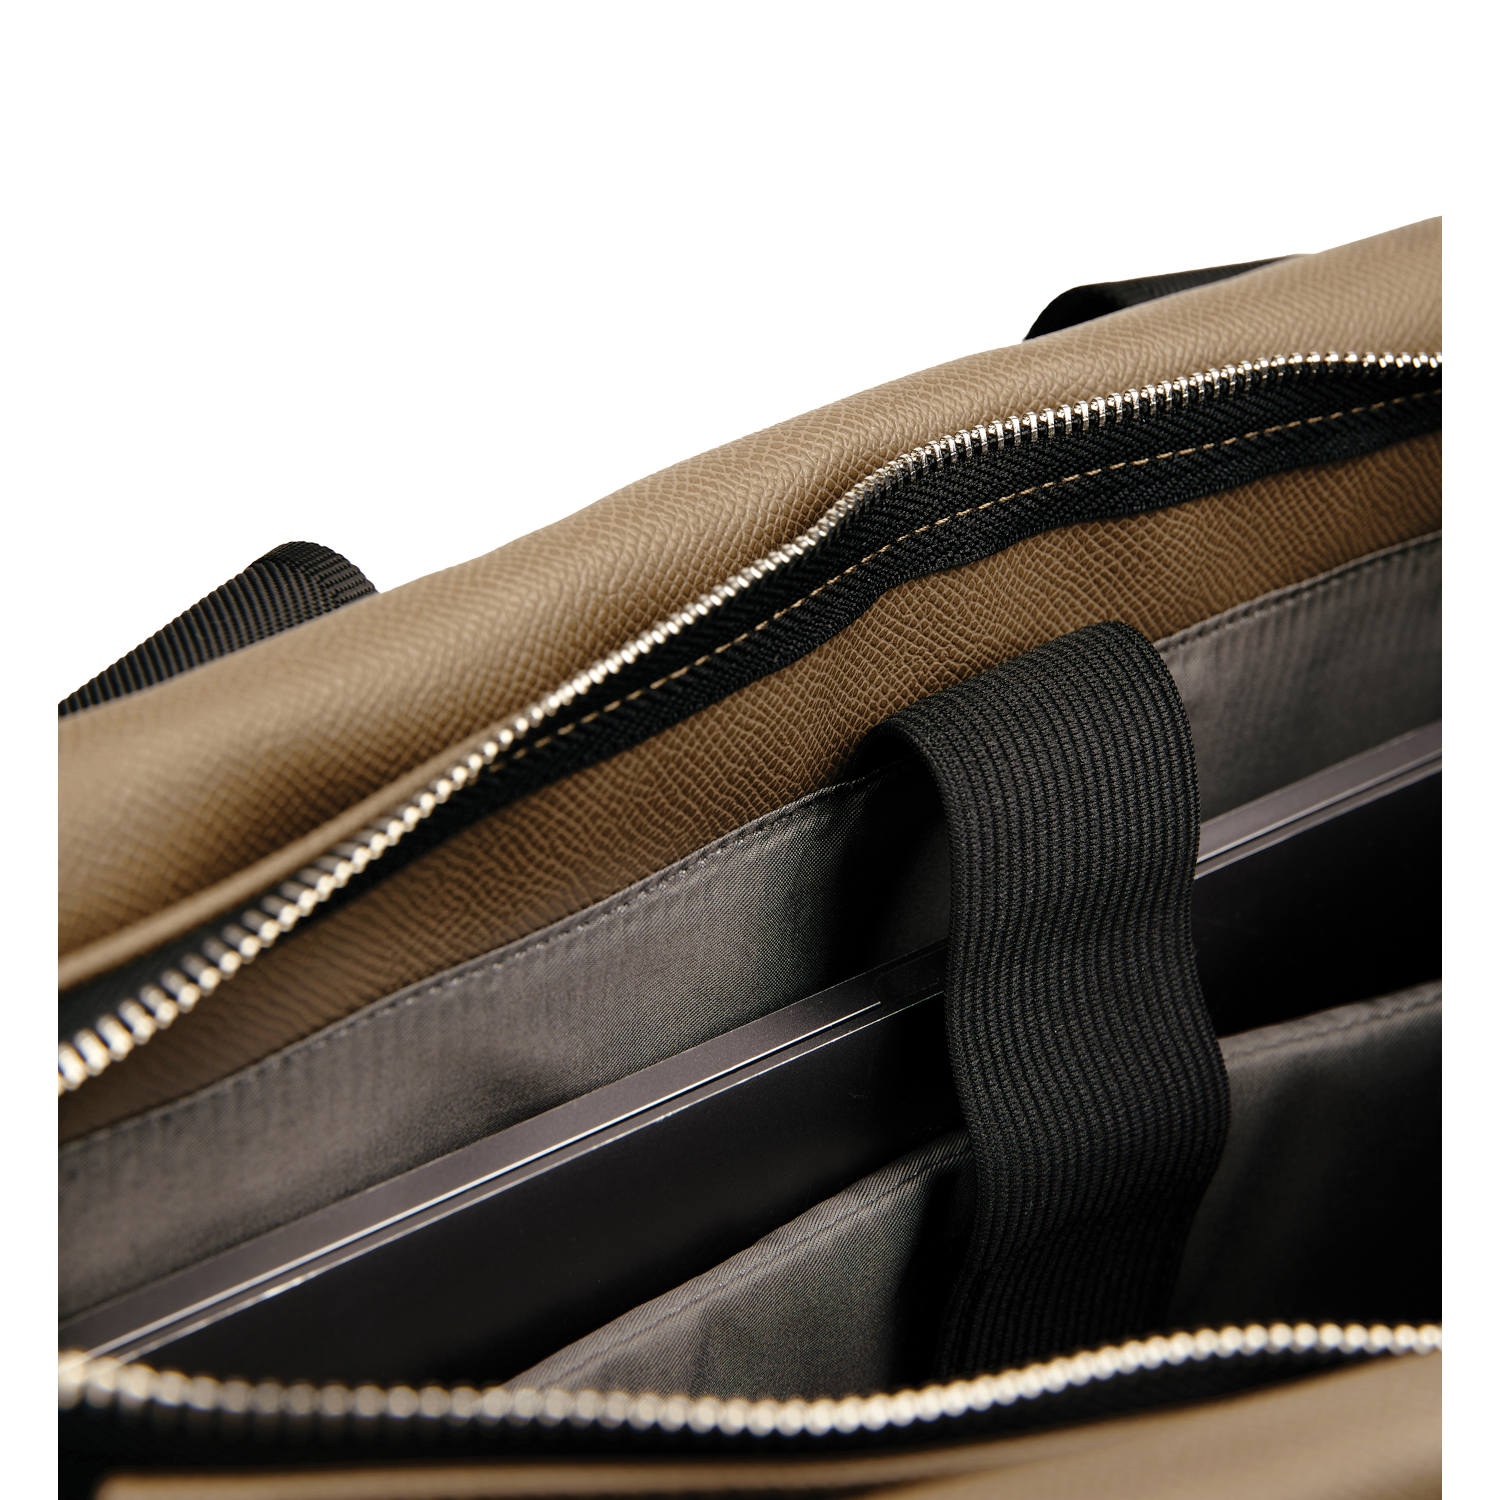 Bermond Leather-Look PU Laptop Tote Bag